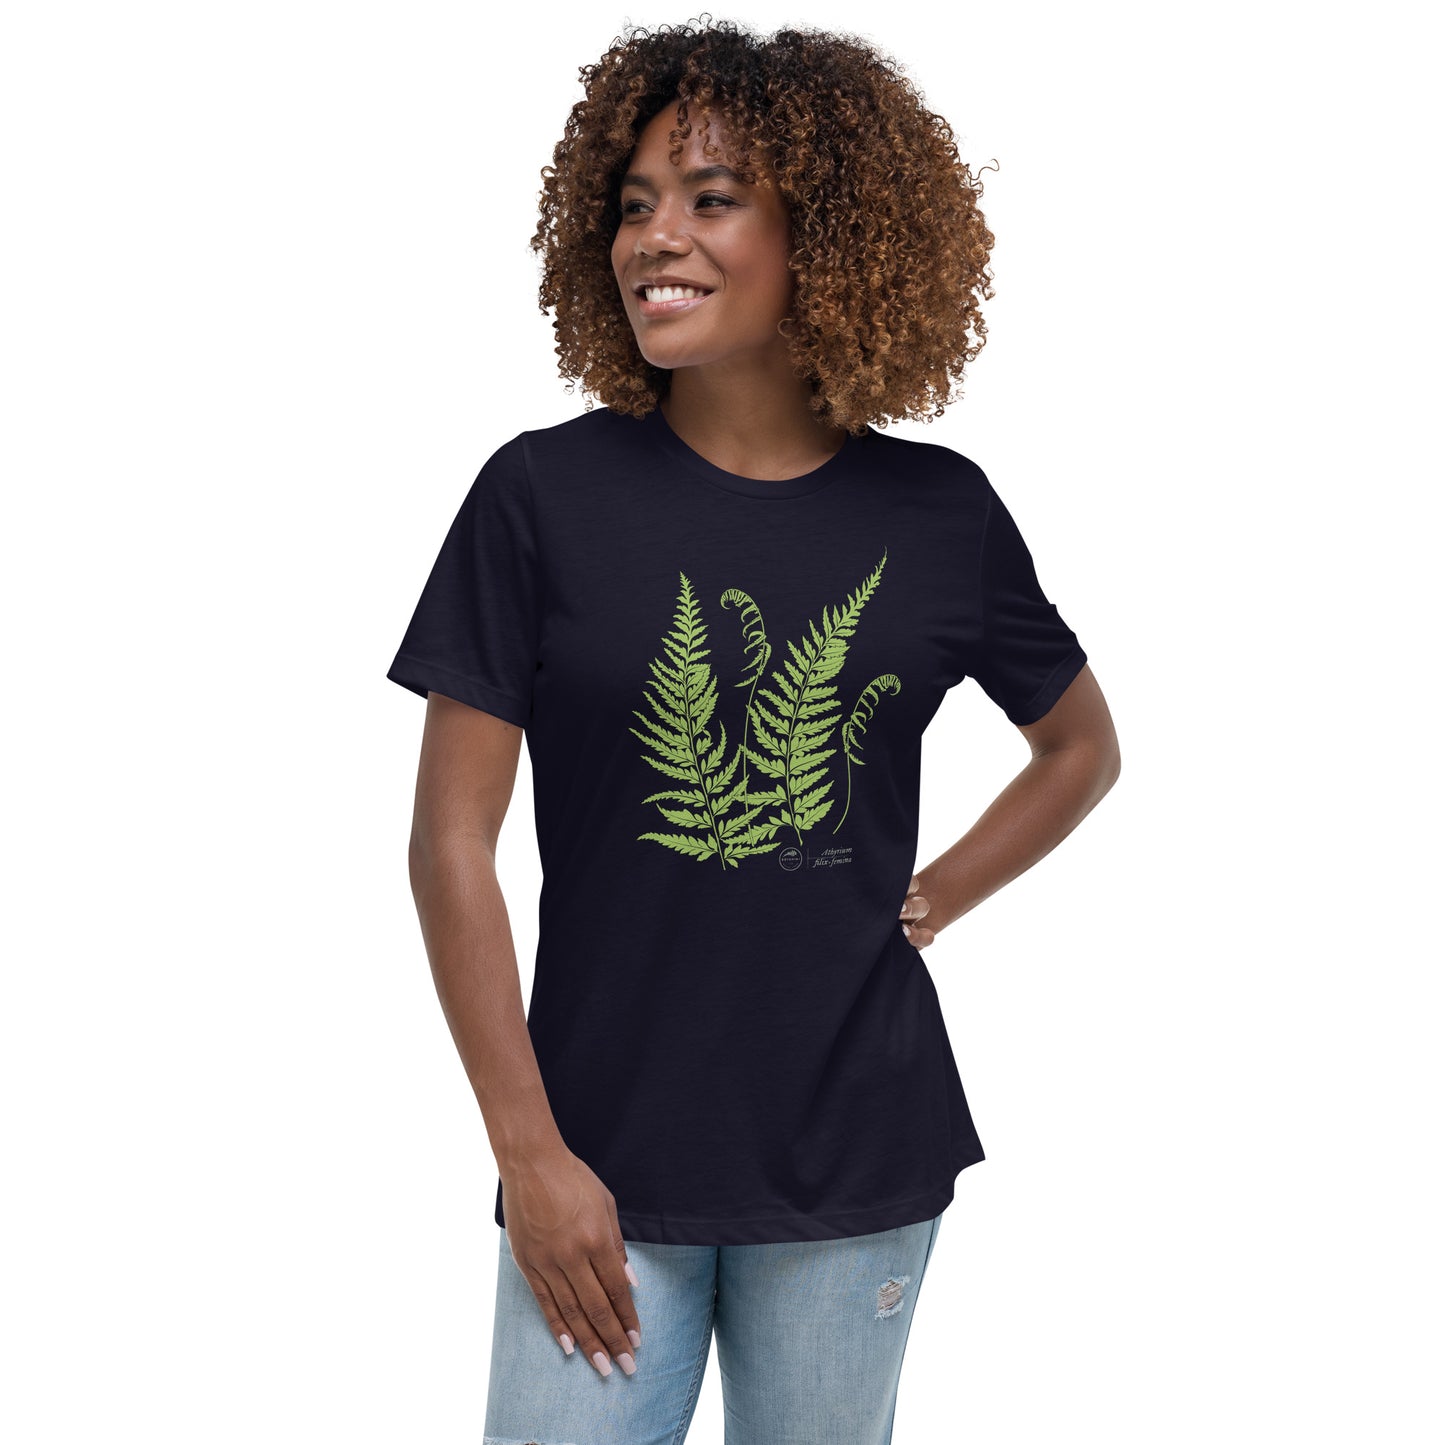 Women's Relaxed T-Shirt - Lady fern